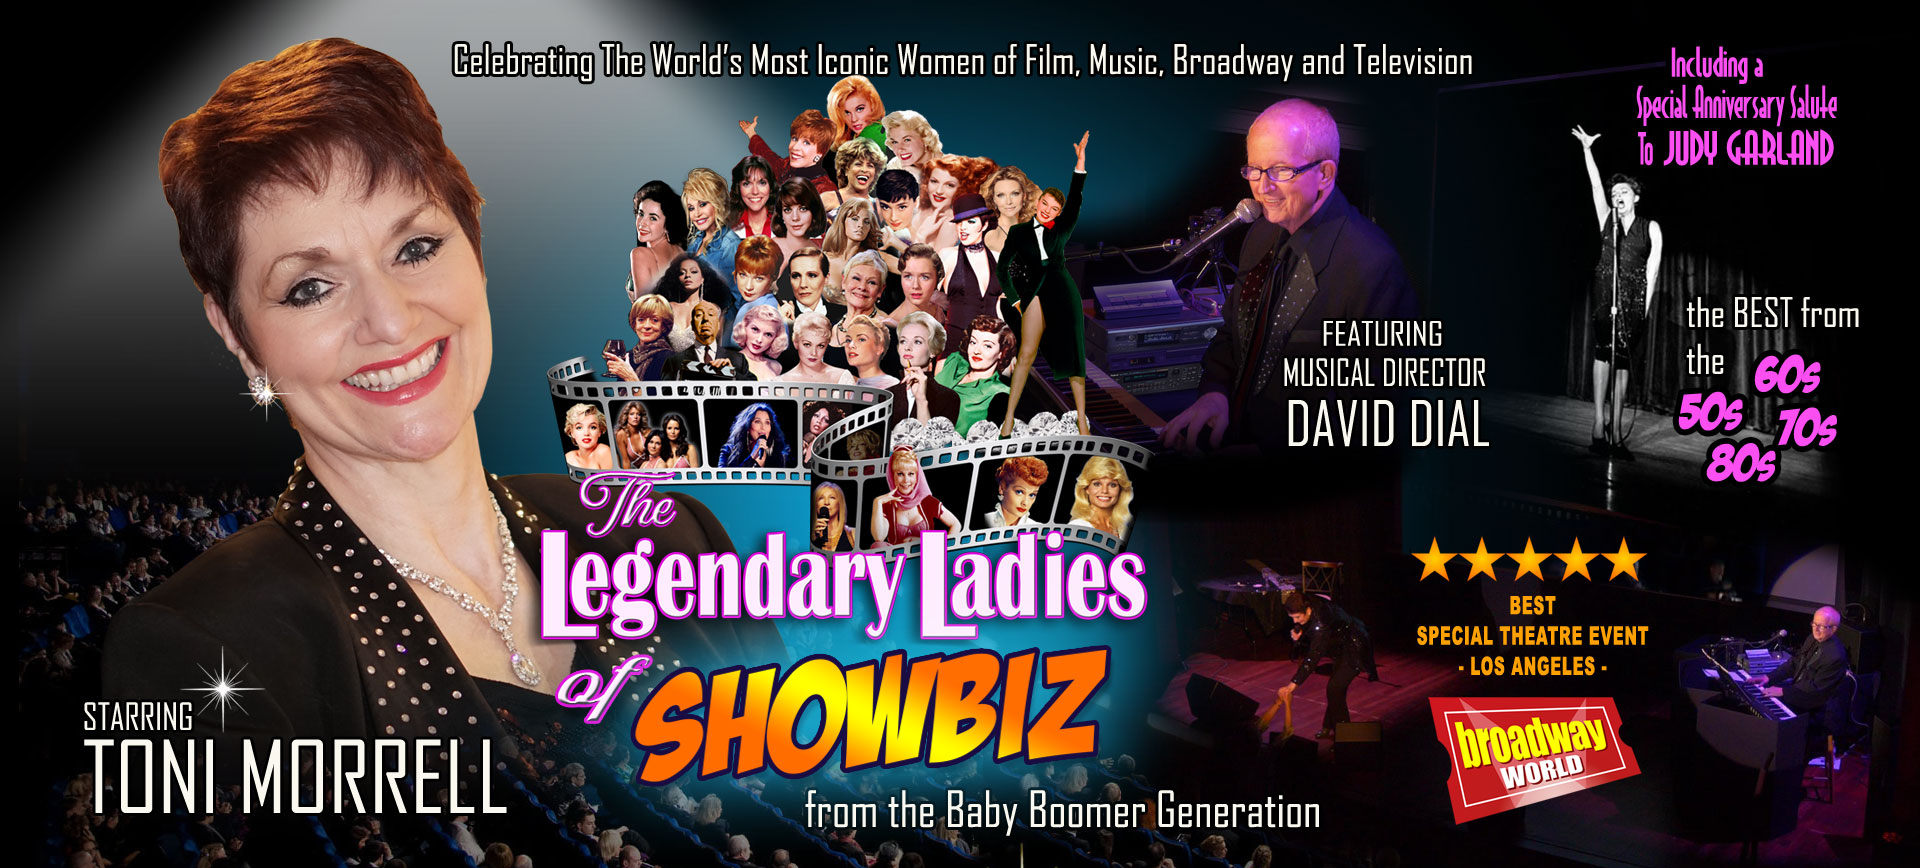 The Legendary Ladies of ShowBiz